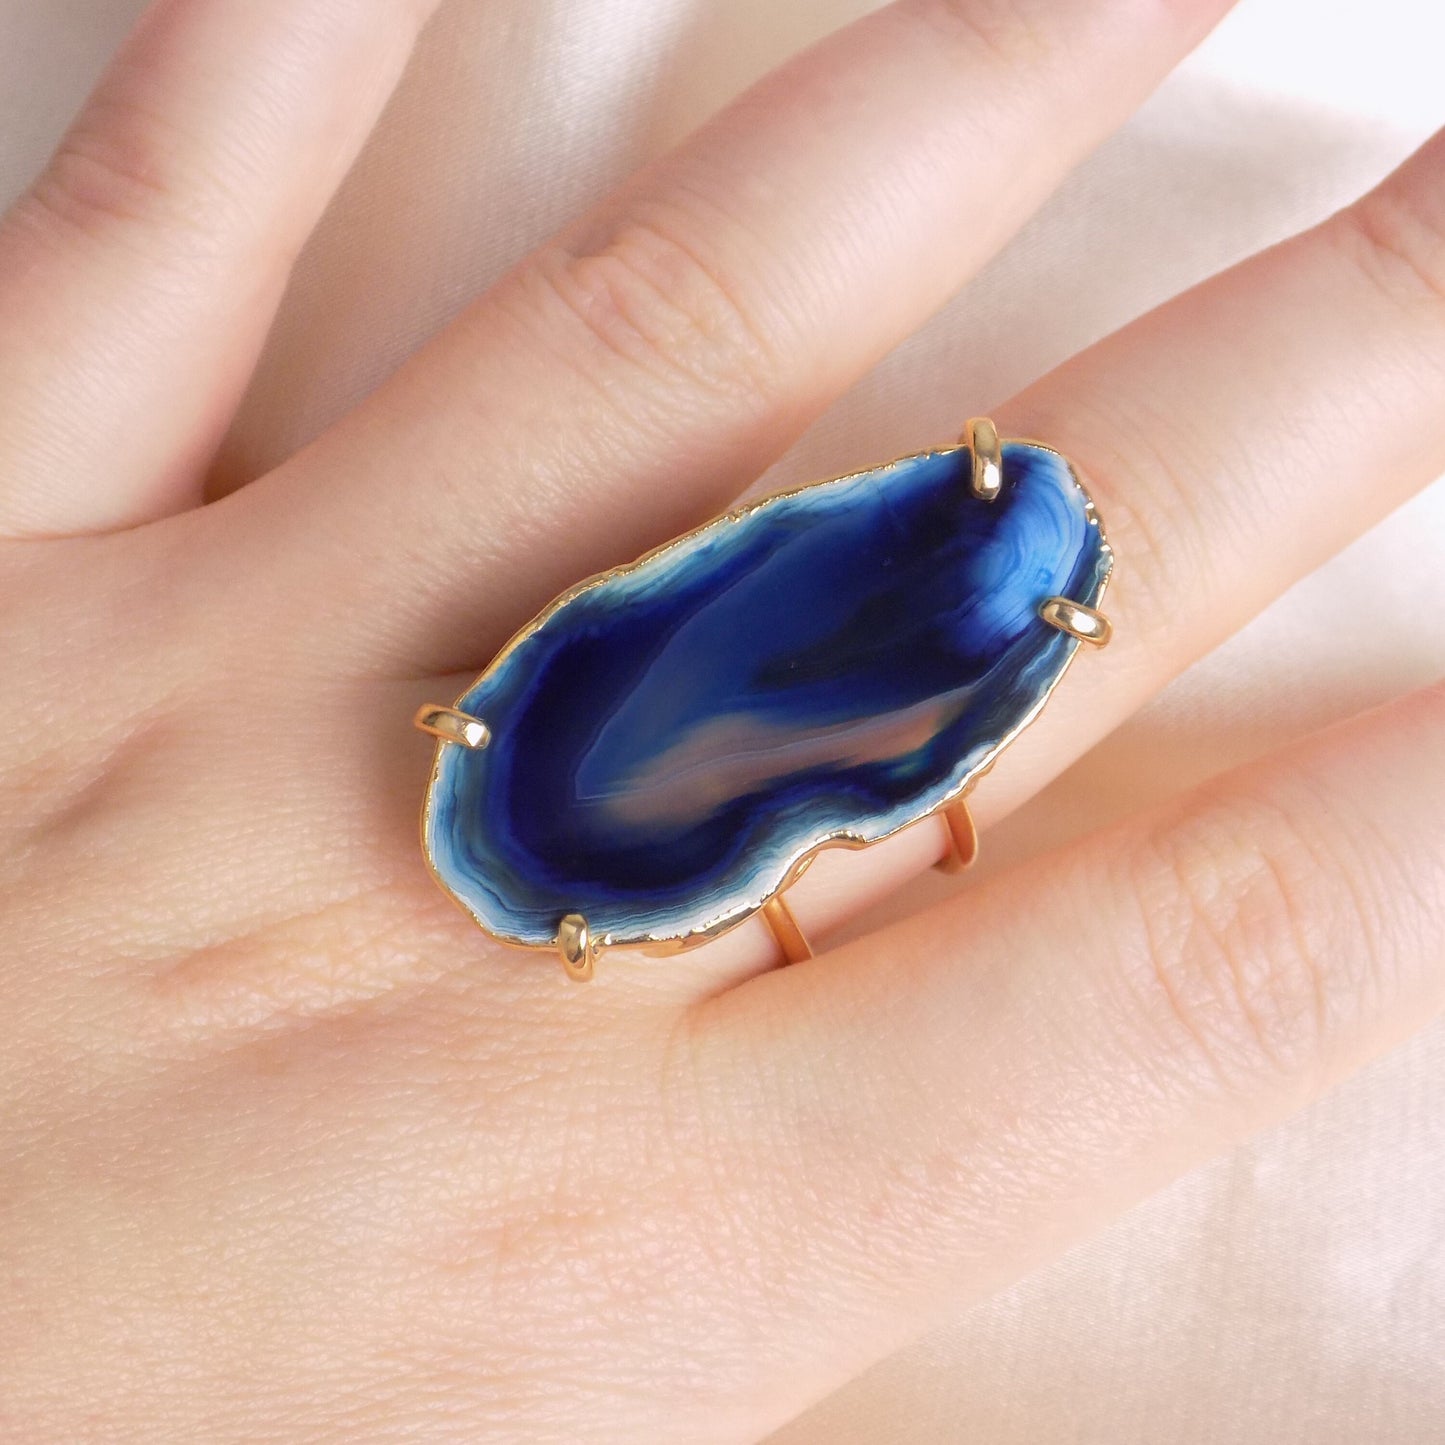 Boho Blue Agate Natural Gemstone Ring - Gold Dipped Adjustable Rings - Christmas Gift Women - G15-229